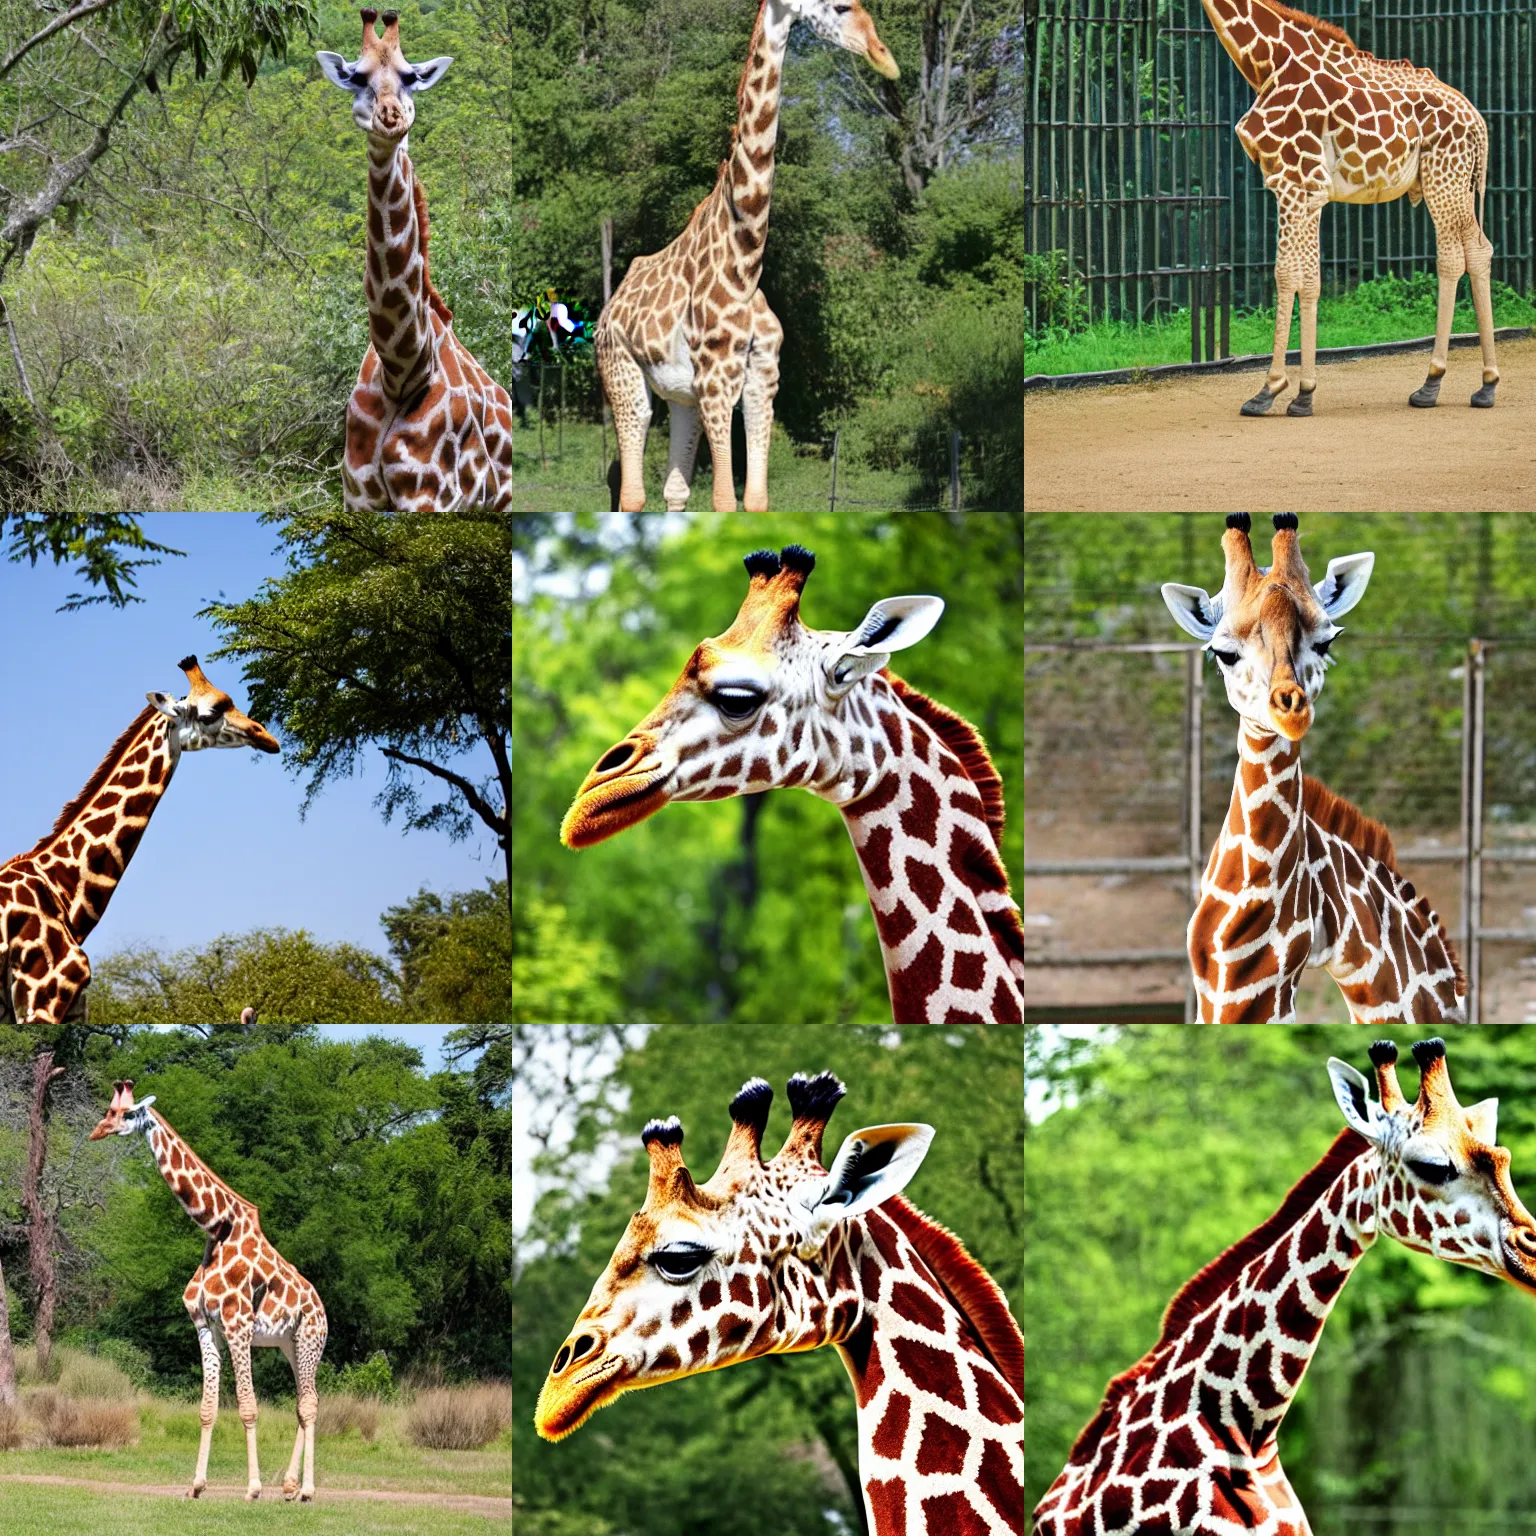 Prompt: giraffe in the zoo